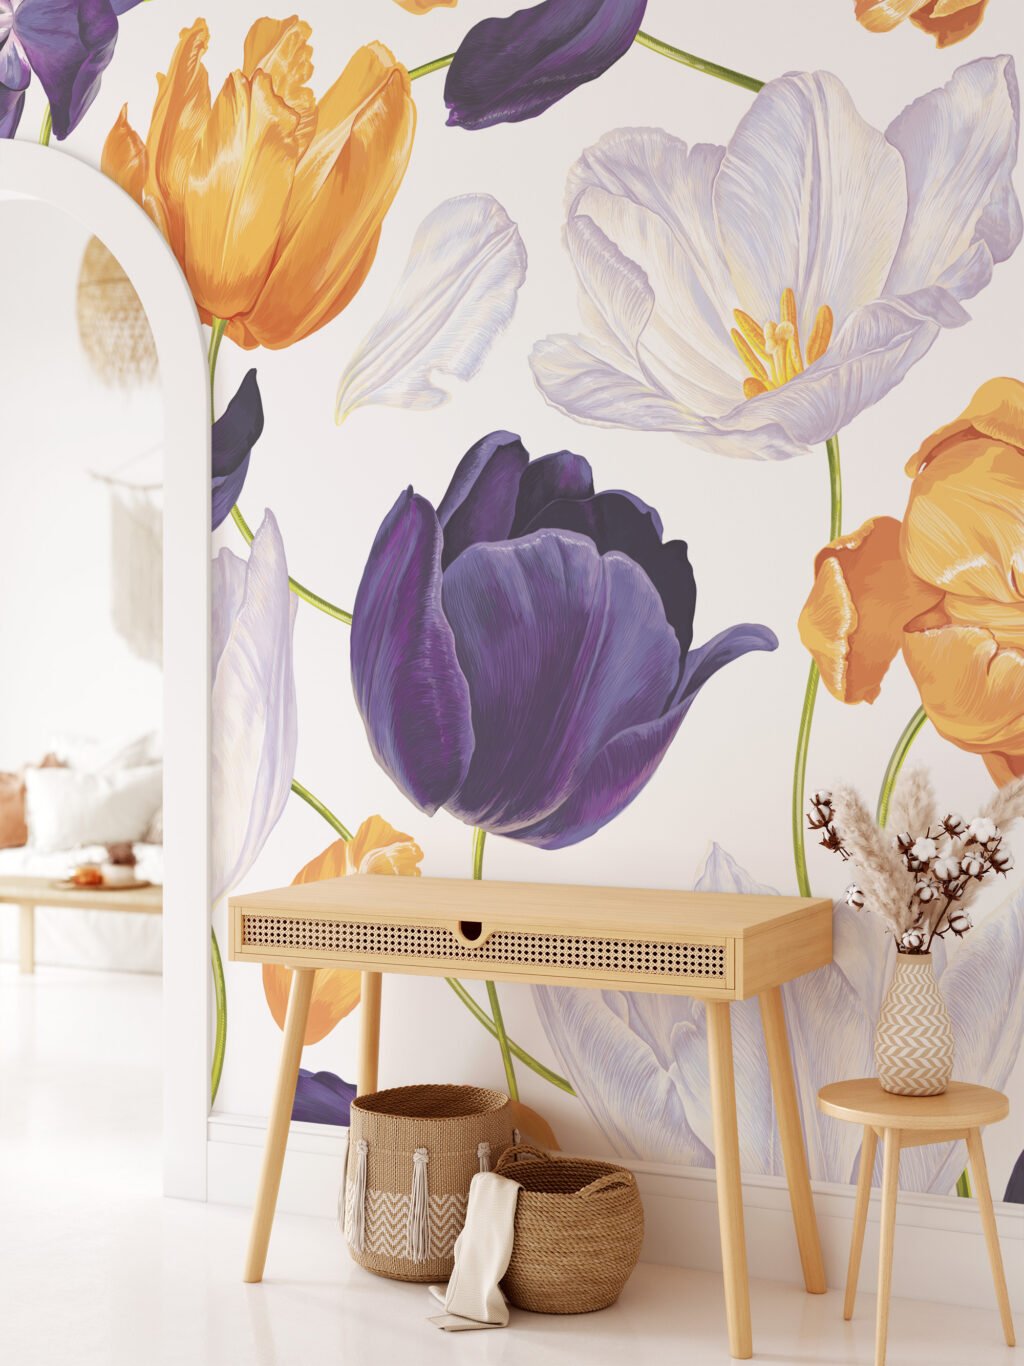 Modern Tasarımlı Yumuşak Dev Papatya Çiçekleri Desenli Duvar Kağıdı Çiçekli Duvar Kağıtları 6